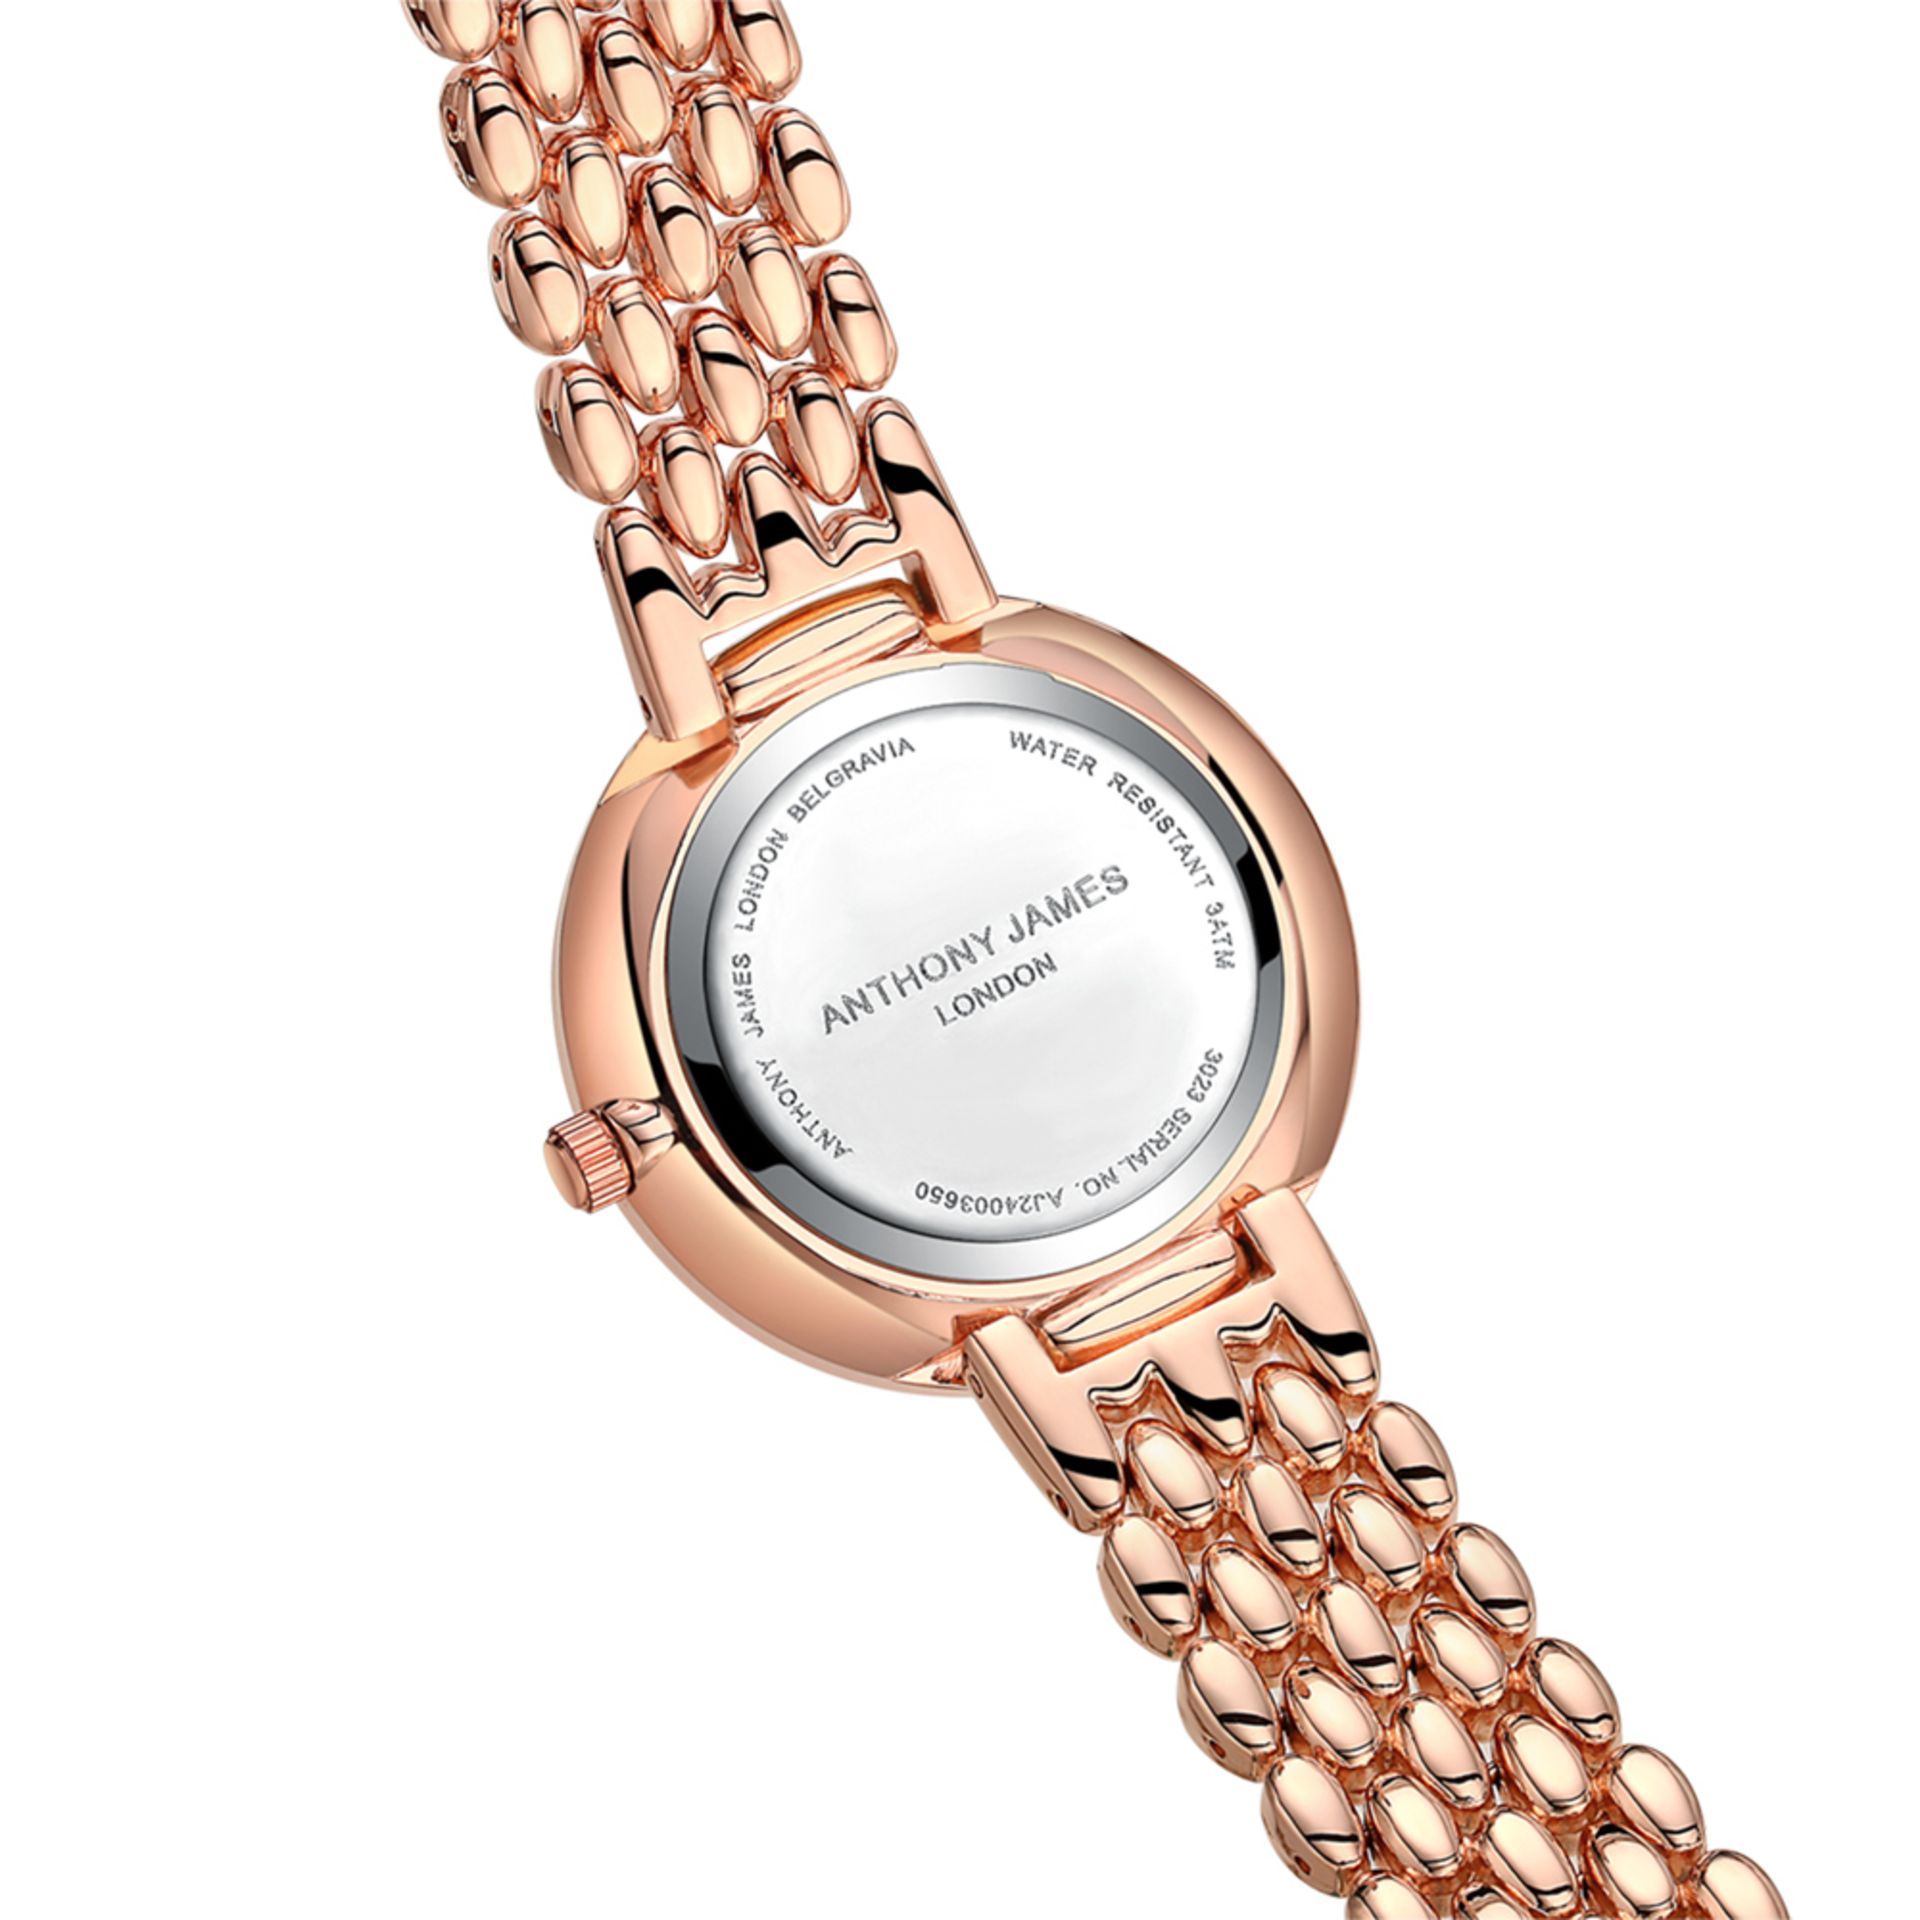 V Brand New Anthony James Ladies Belgravia Rose Gold Finished Watch Set With Swarovski Diamond - Image 2 of 2